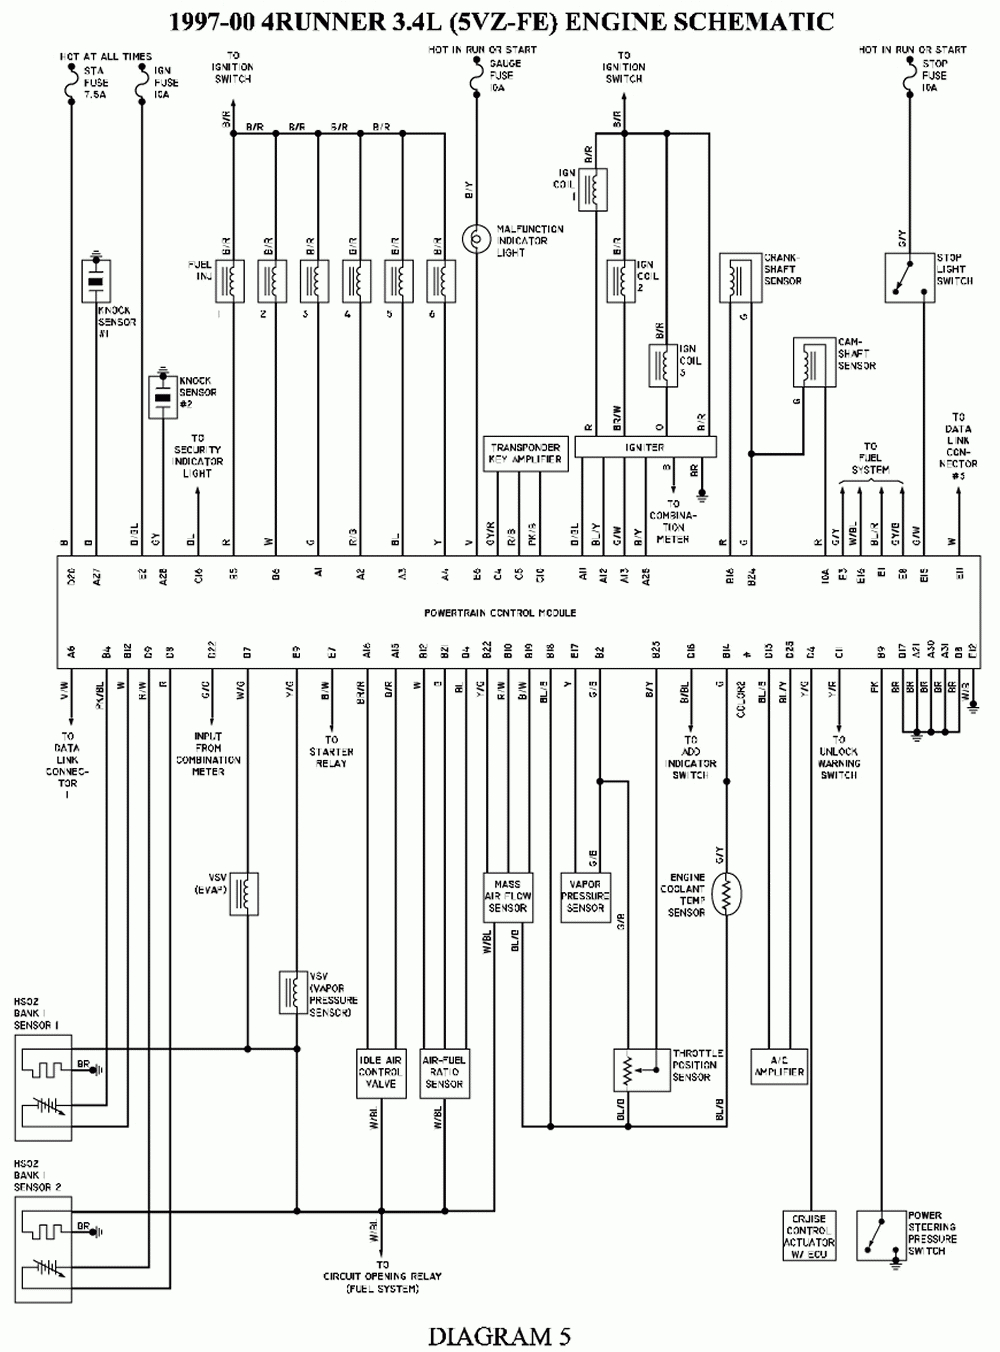 2008 Toyota Tacoma Trailer Wiring Diagram - Wiring Diagram Explained - Toyota Tacoma Trailer Wiring Diagram